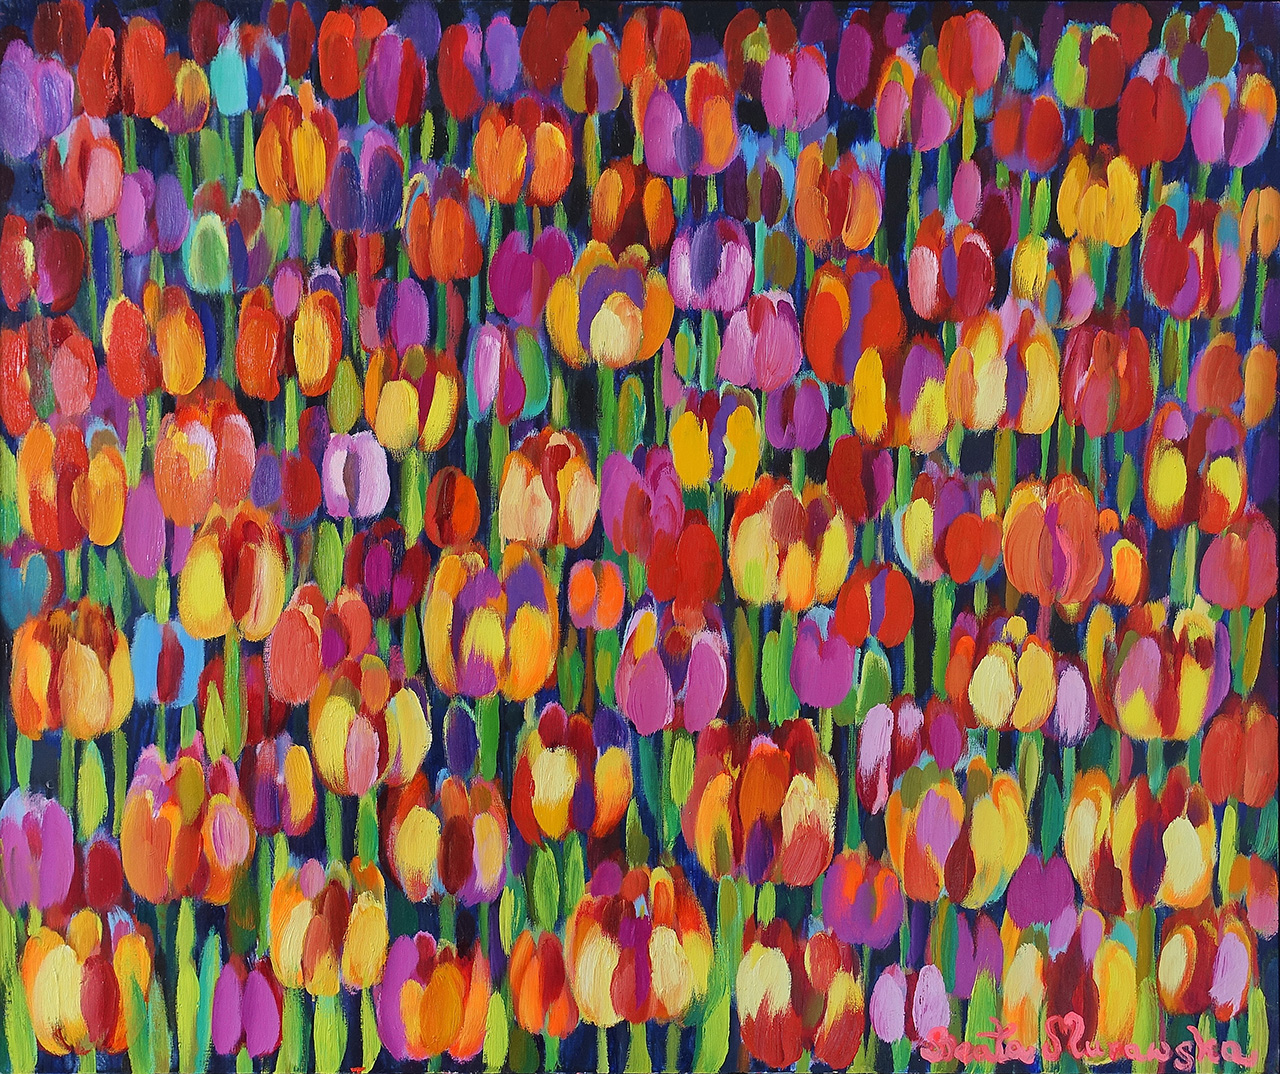 Beata Murawska - Notte dei tulipani (Oil on Canvas | Größe: 126 x 106 cm | Preis: 16000 PLN)